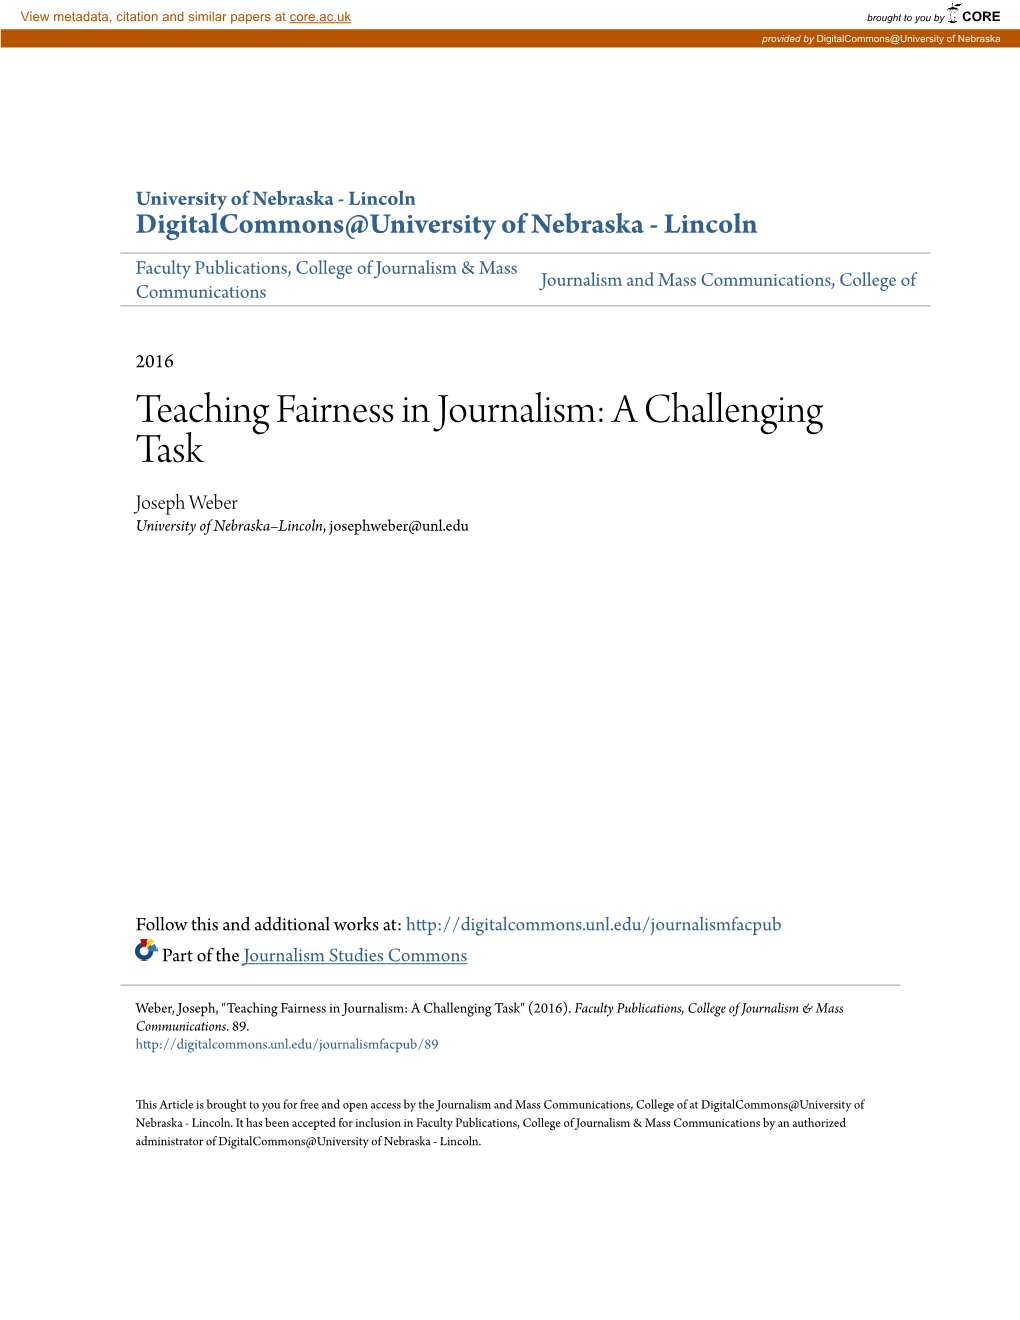 Teaching Fairness in Journalism: a Challenging Task Joseph Weber University of Nebraska–Lincoln, Josephweber@Unl.Edu